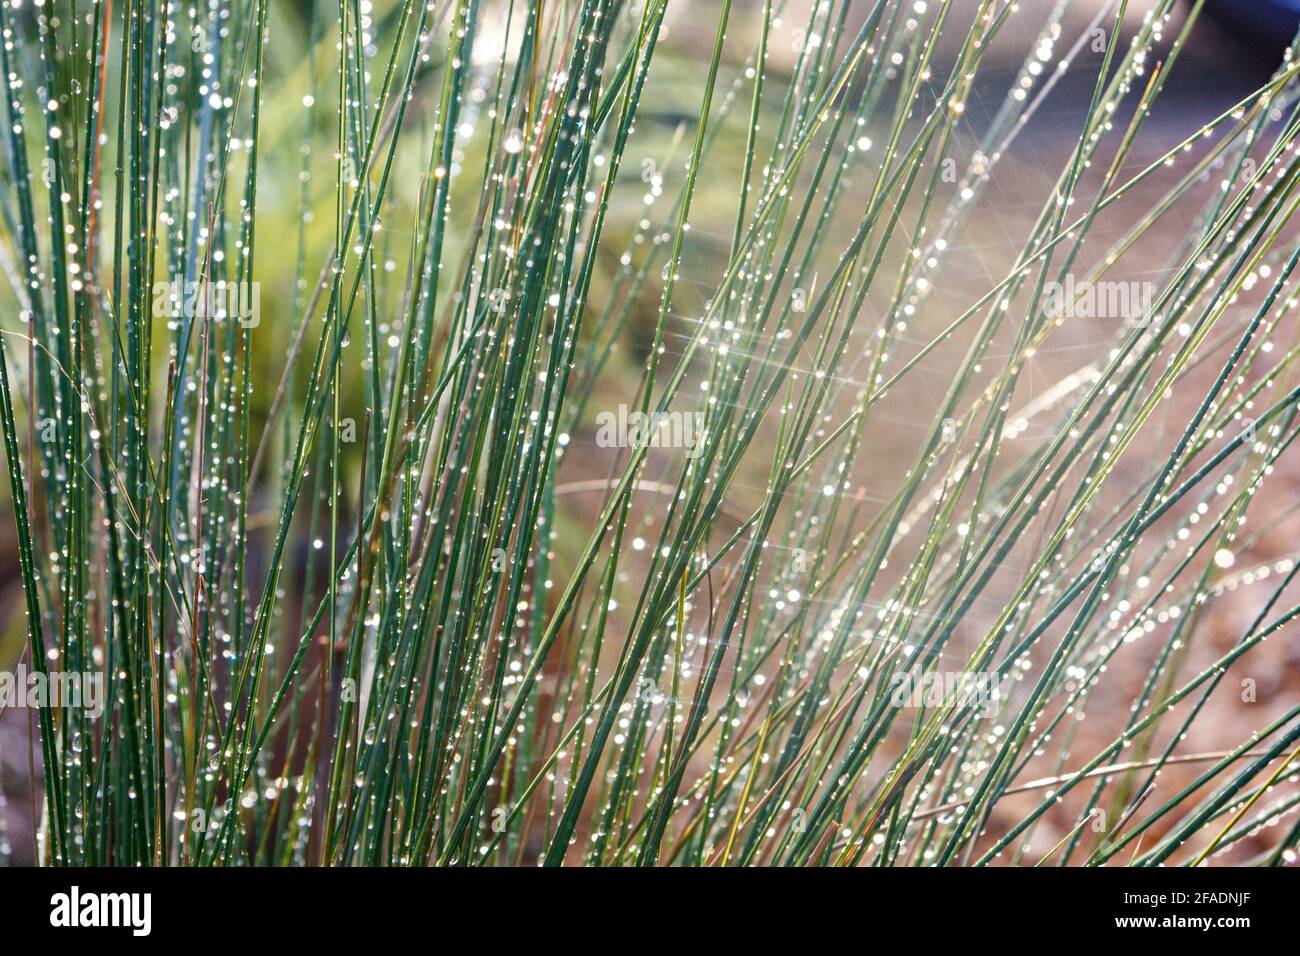 Muhly Grass with raindrops Stock Photo